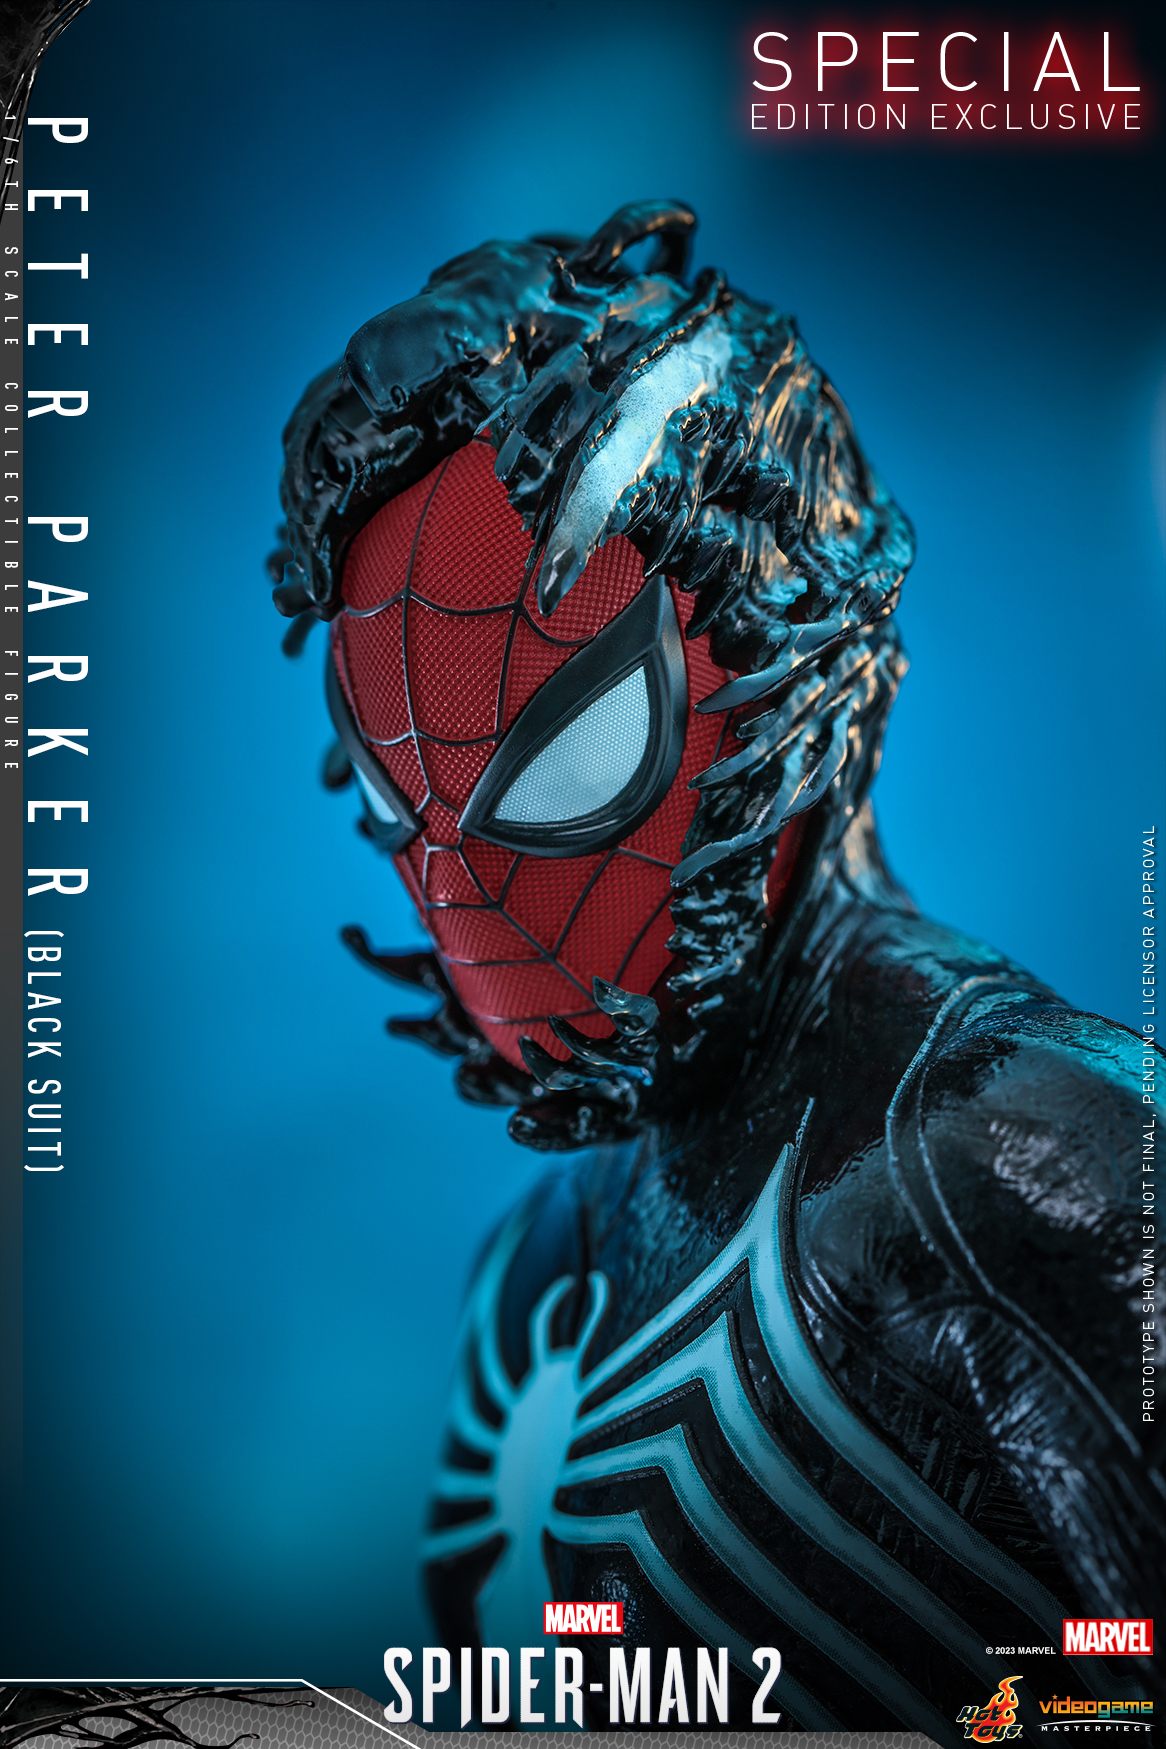 Action Figure Homem-Aranha Spider-Man Advanced Suit: Marvel's